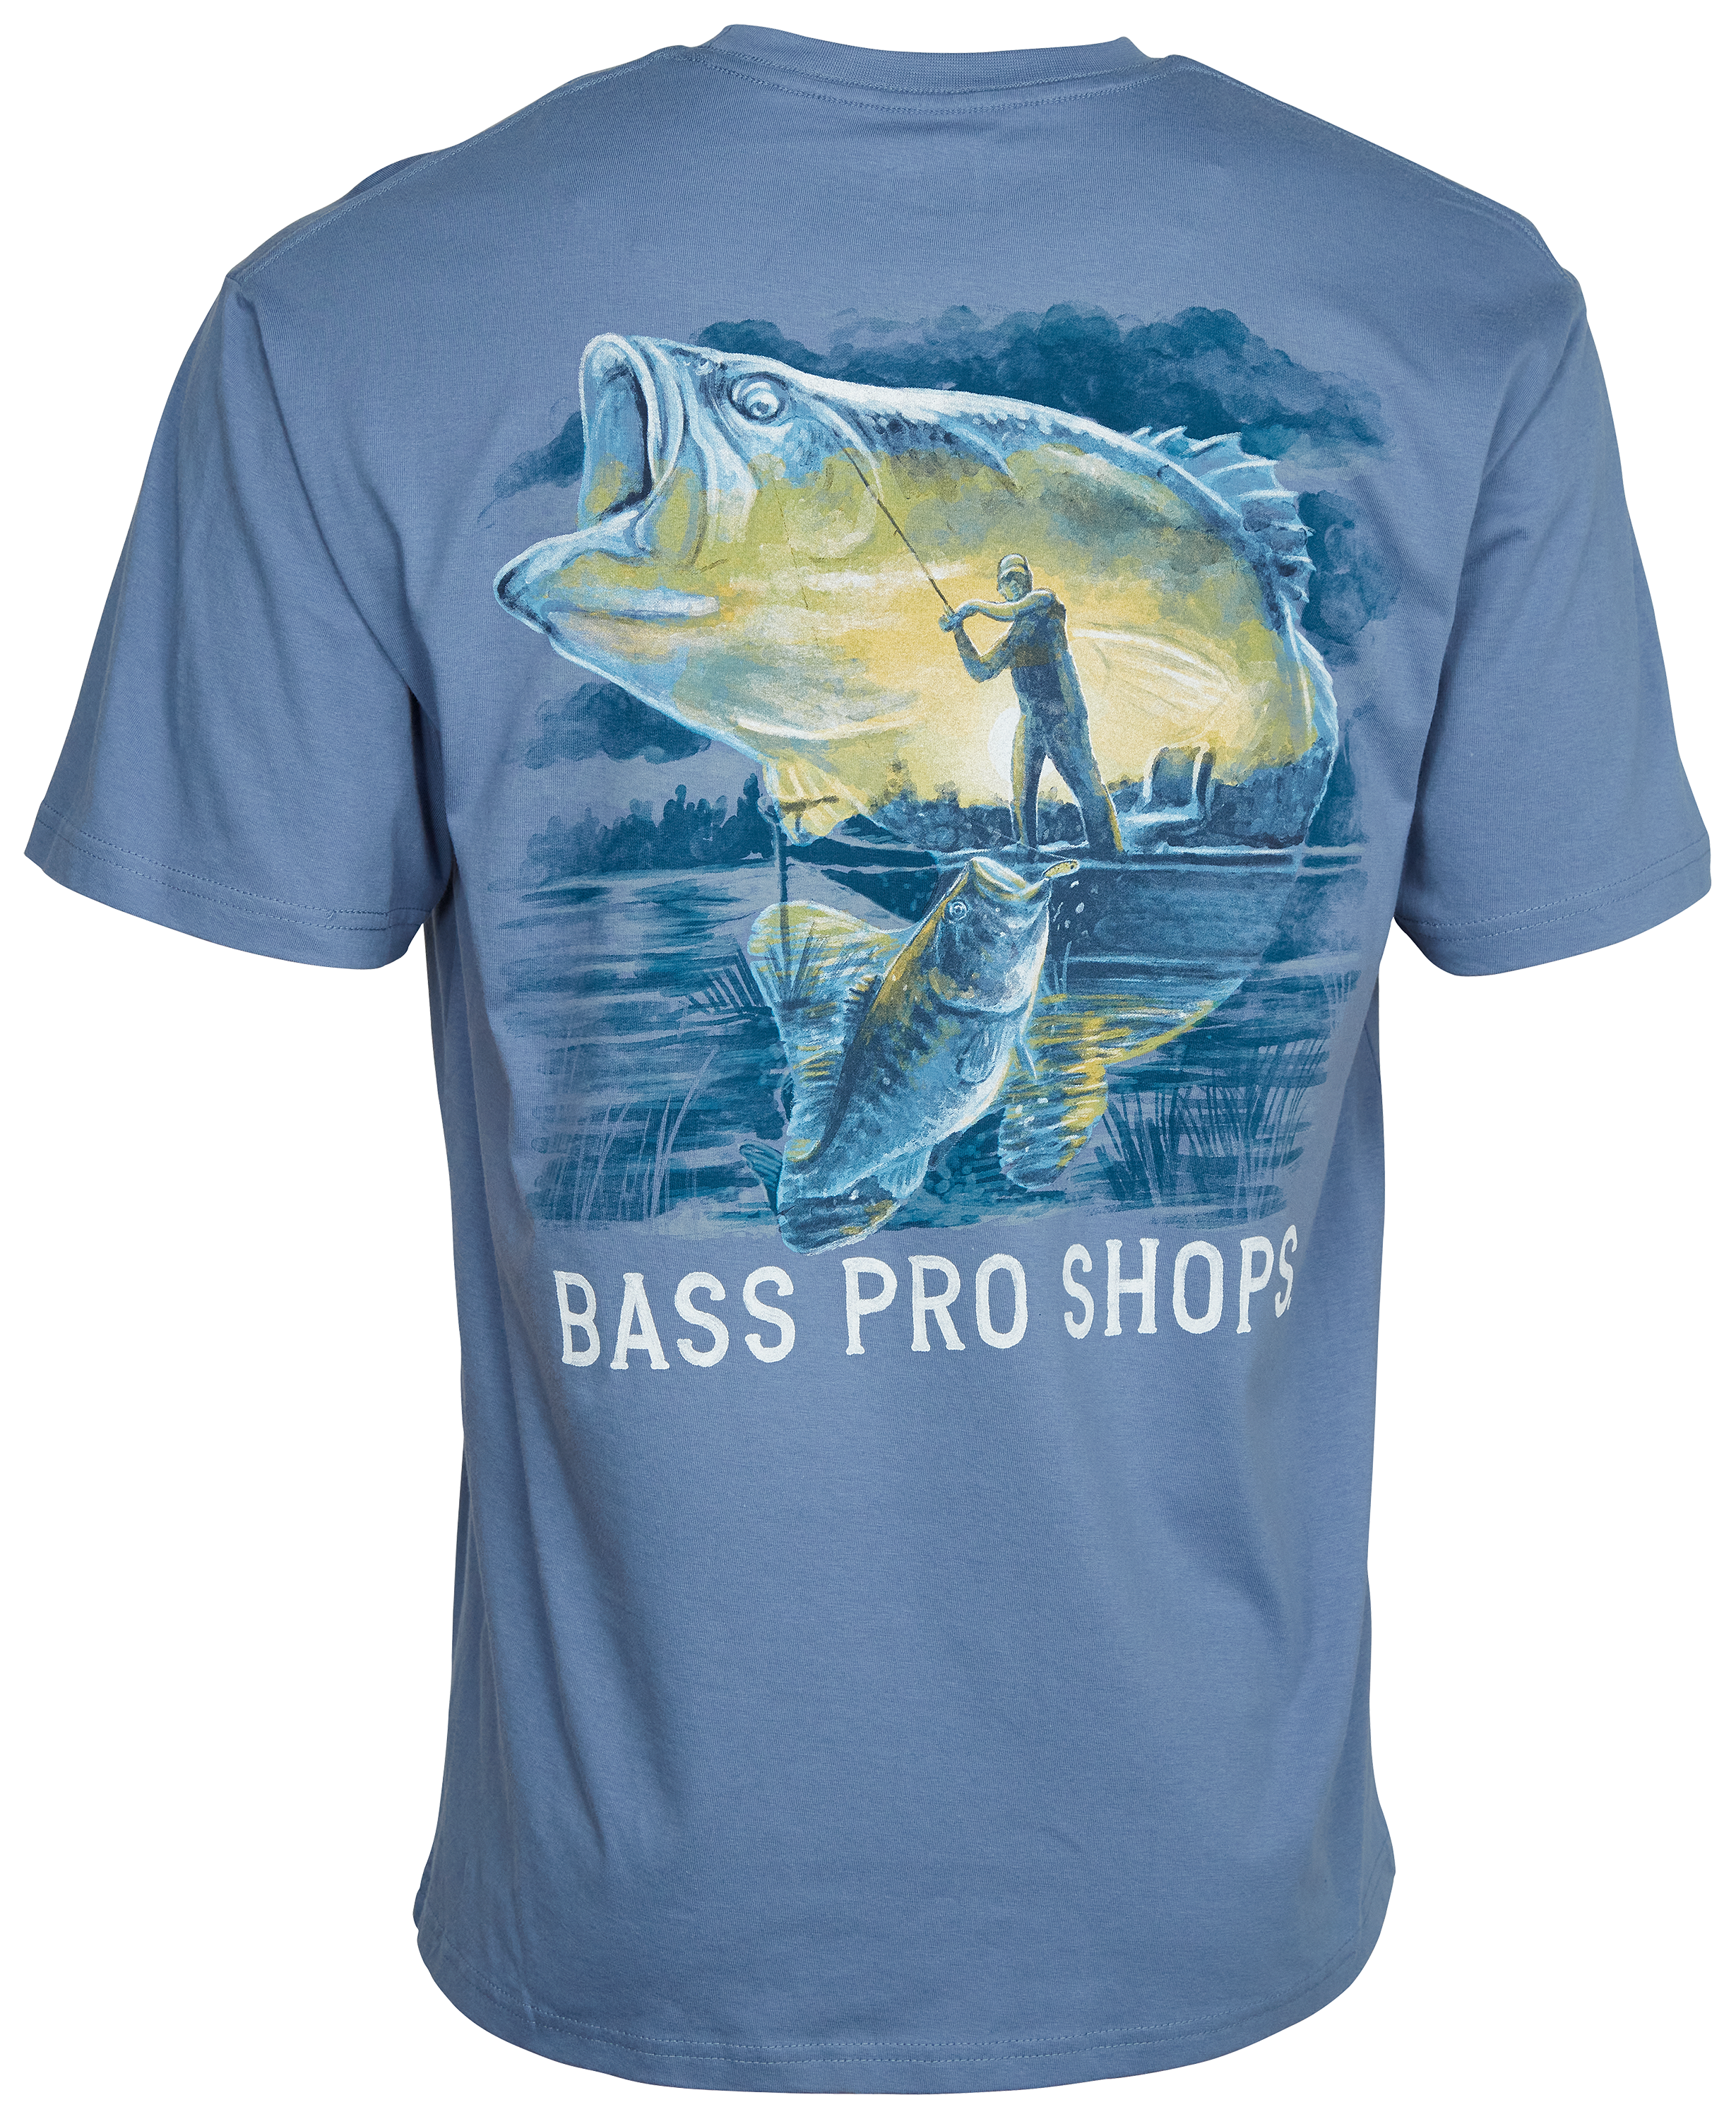 Bass Pro Shops Bass Wildlife Graphic Short-Sleeve T-Shirt for Men - Infinity - M